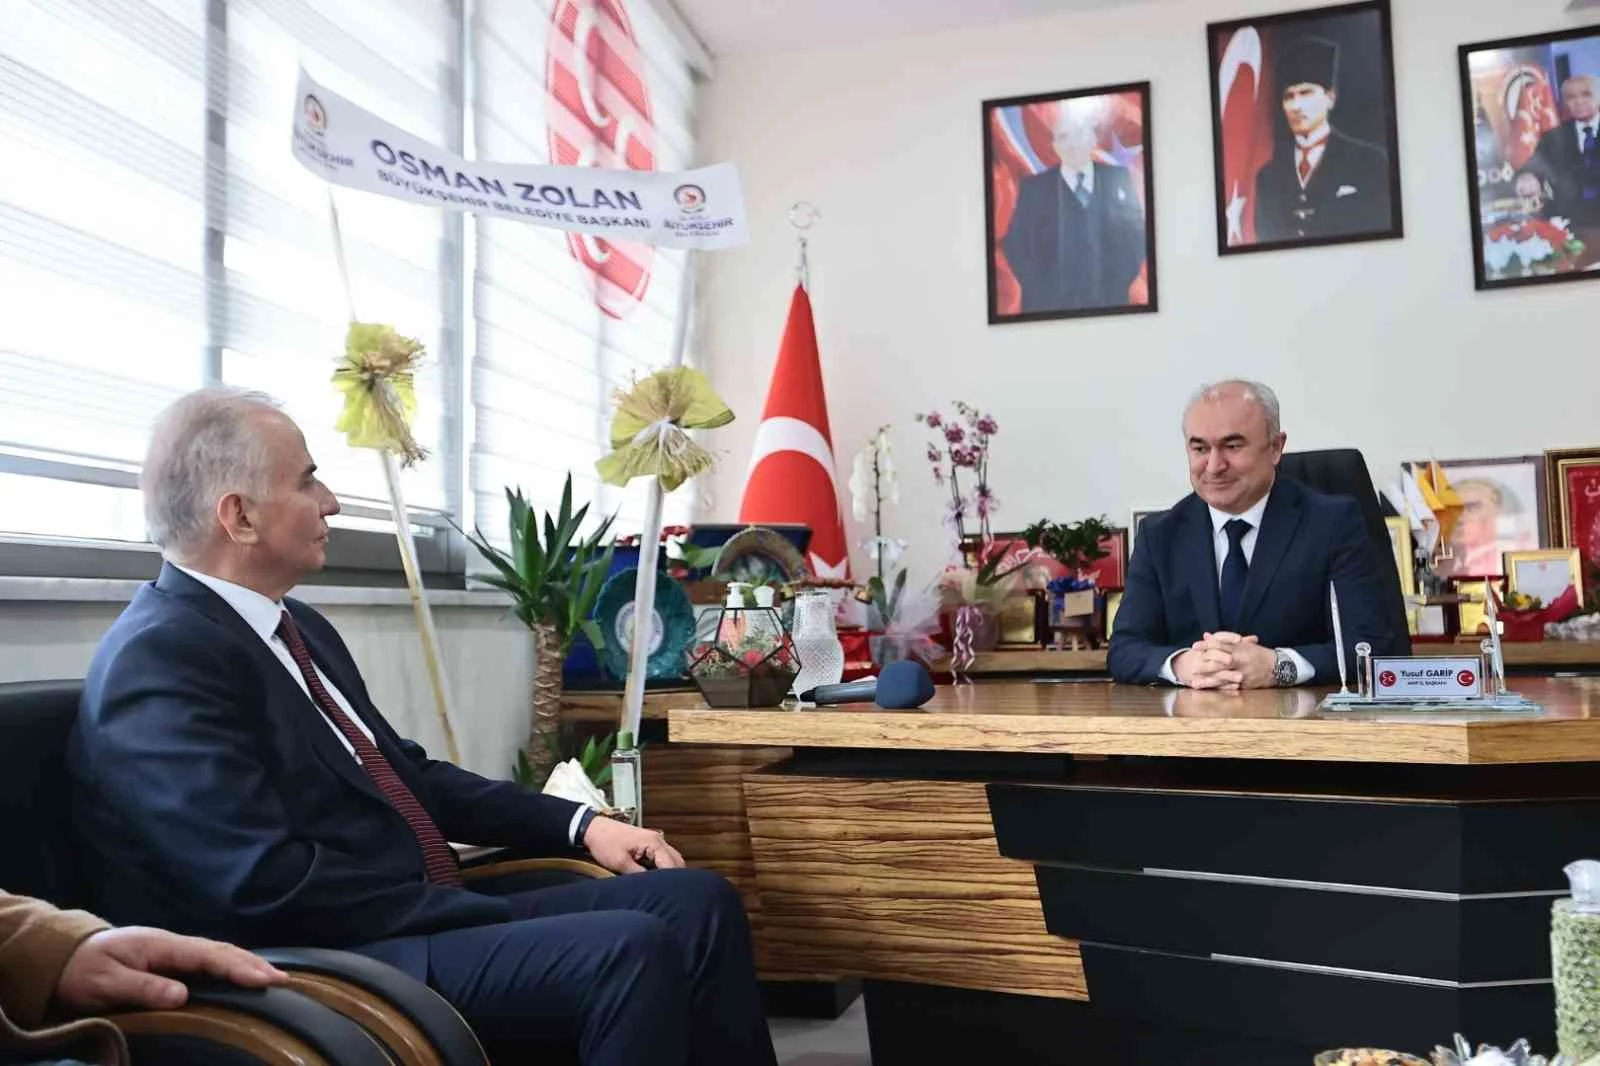 Başkan Zolandan MHP İl Başkanı Garipe ziyaret